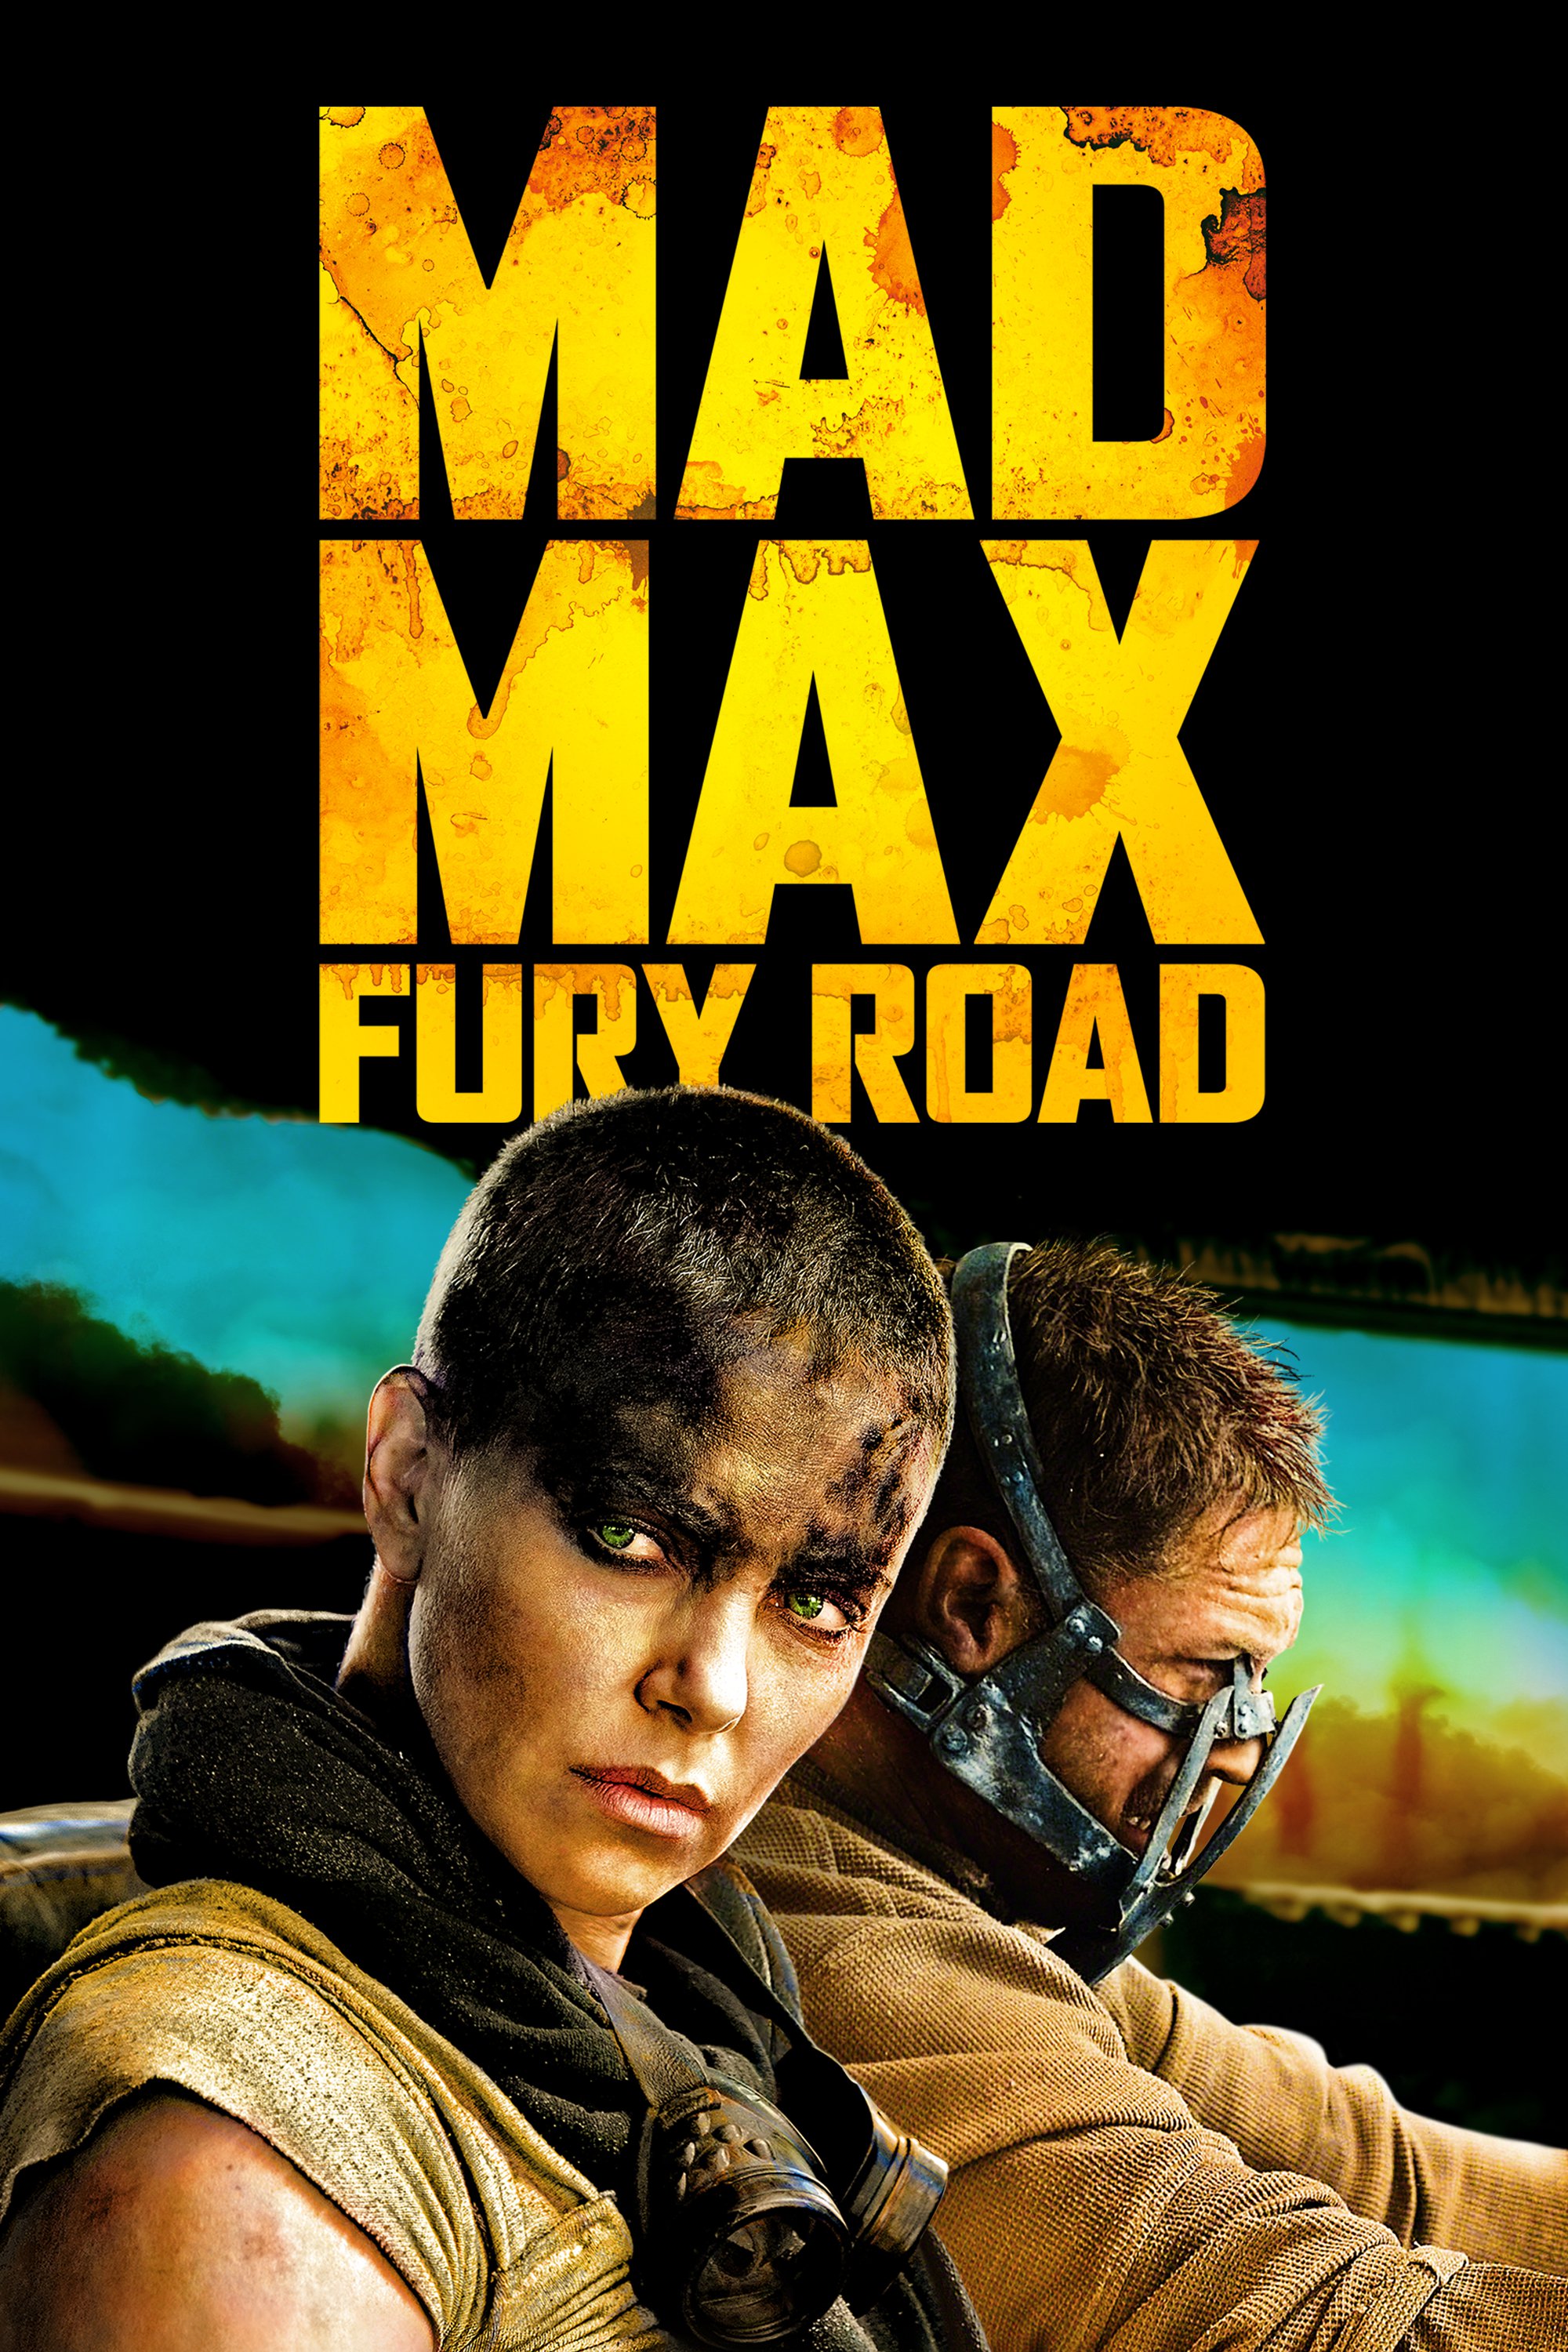 Plakat von "Mad Max: Fury Road"